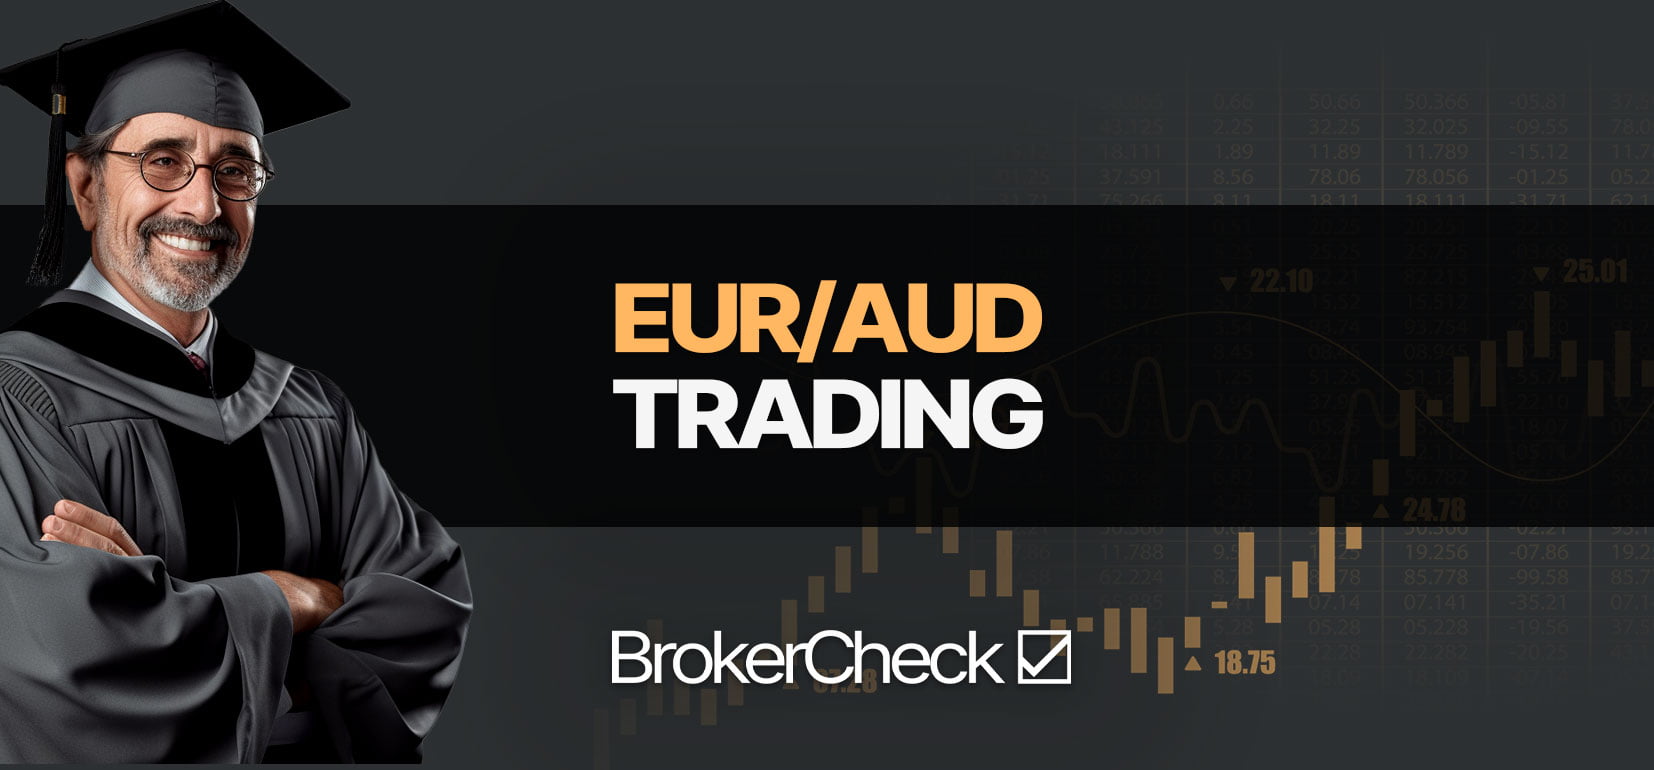 Como Hacer Trade EUR/AUD con éxito